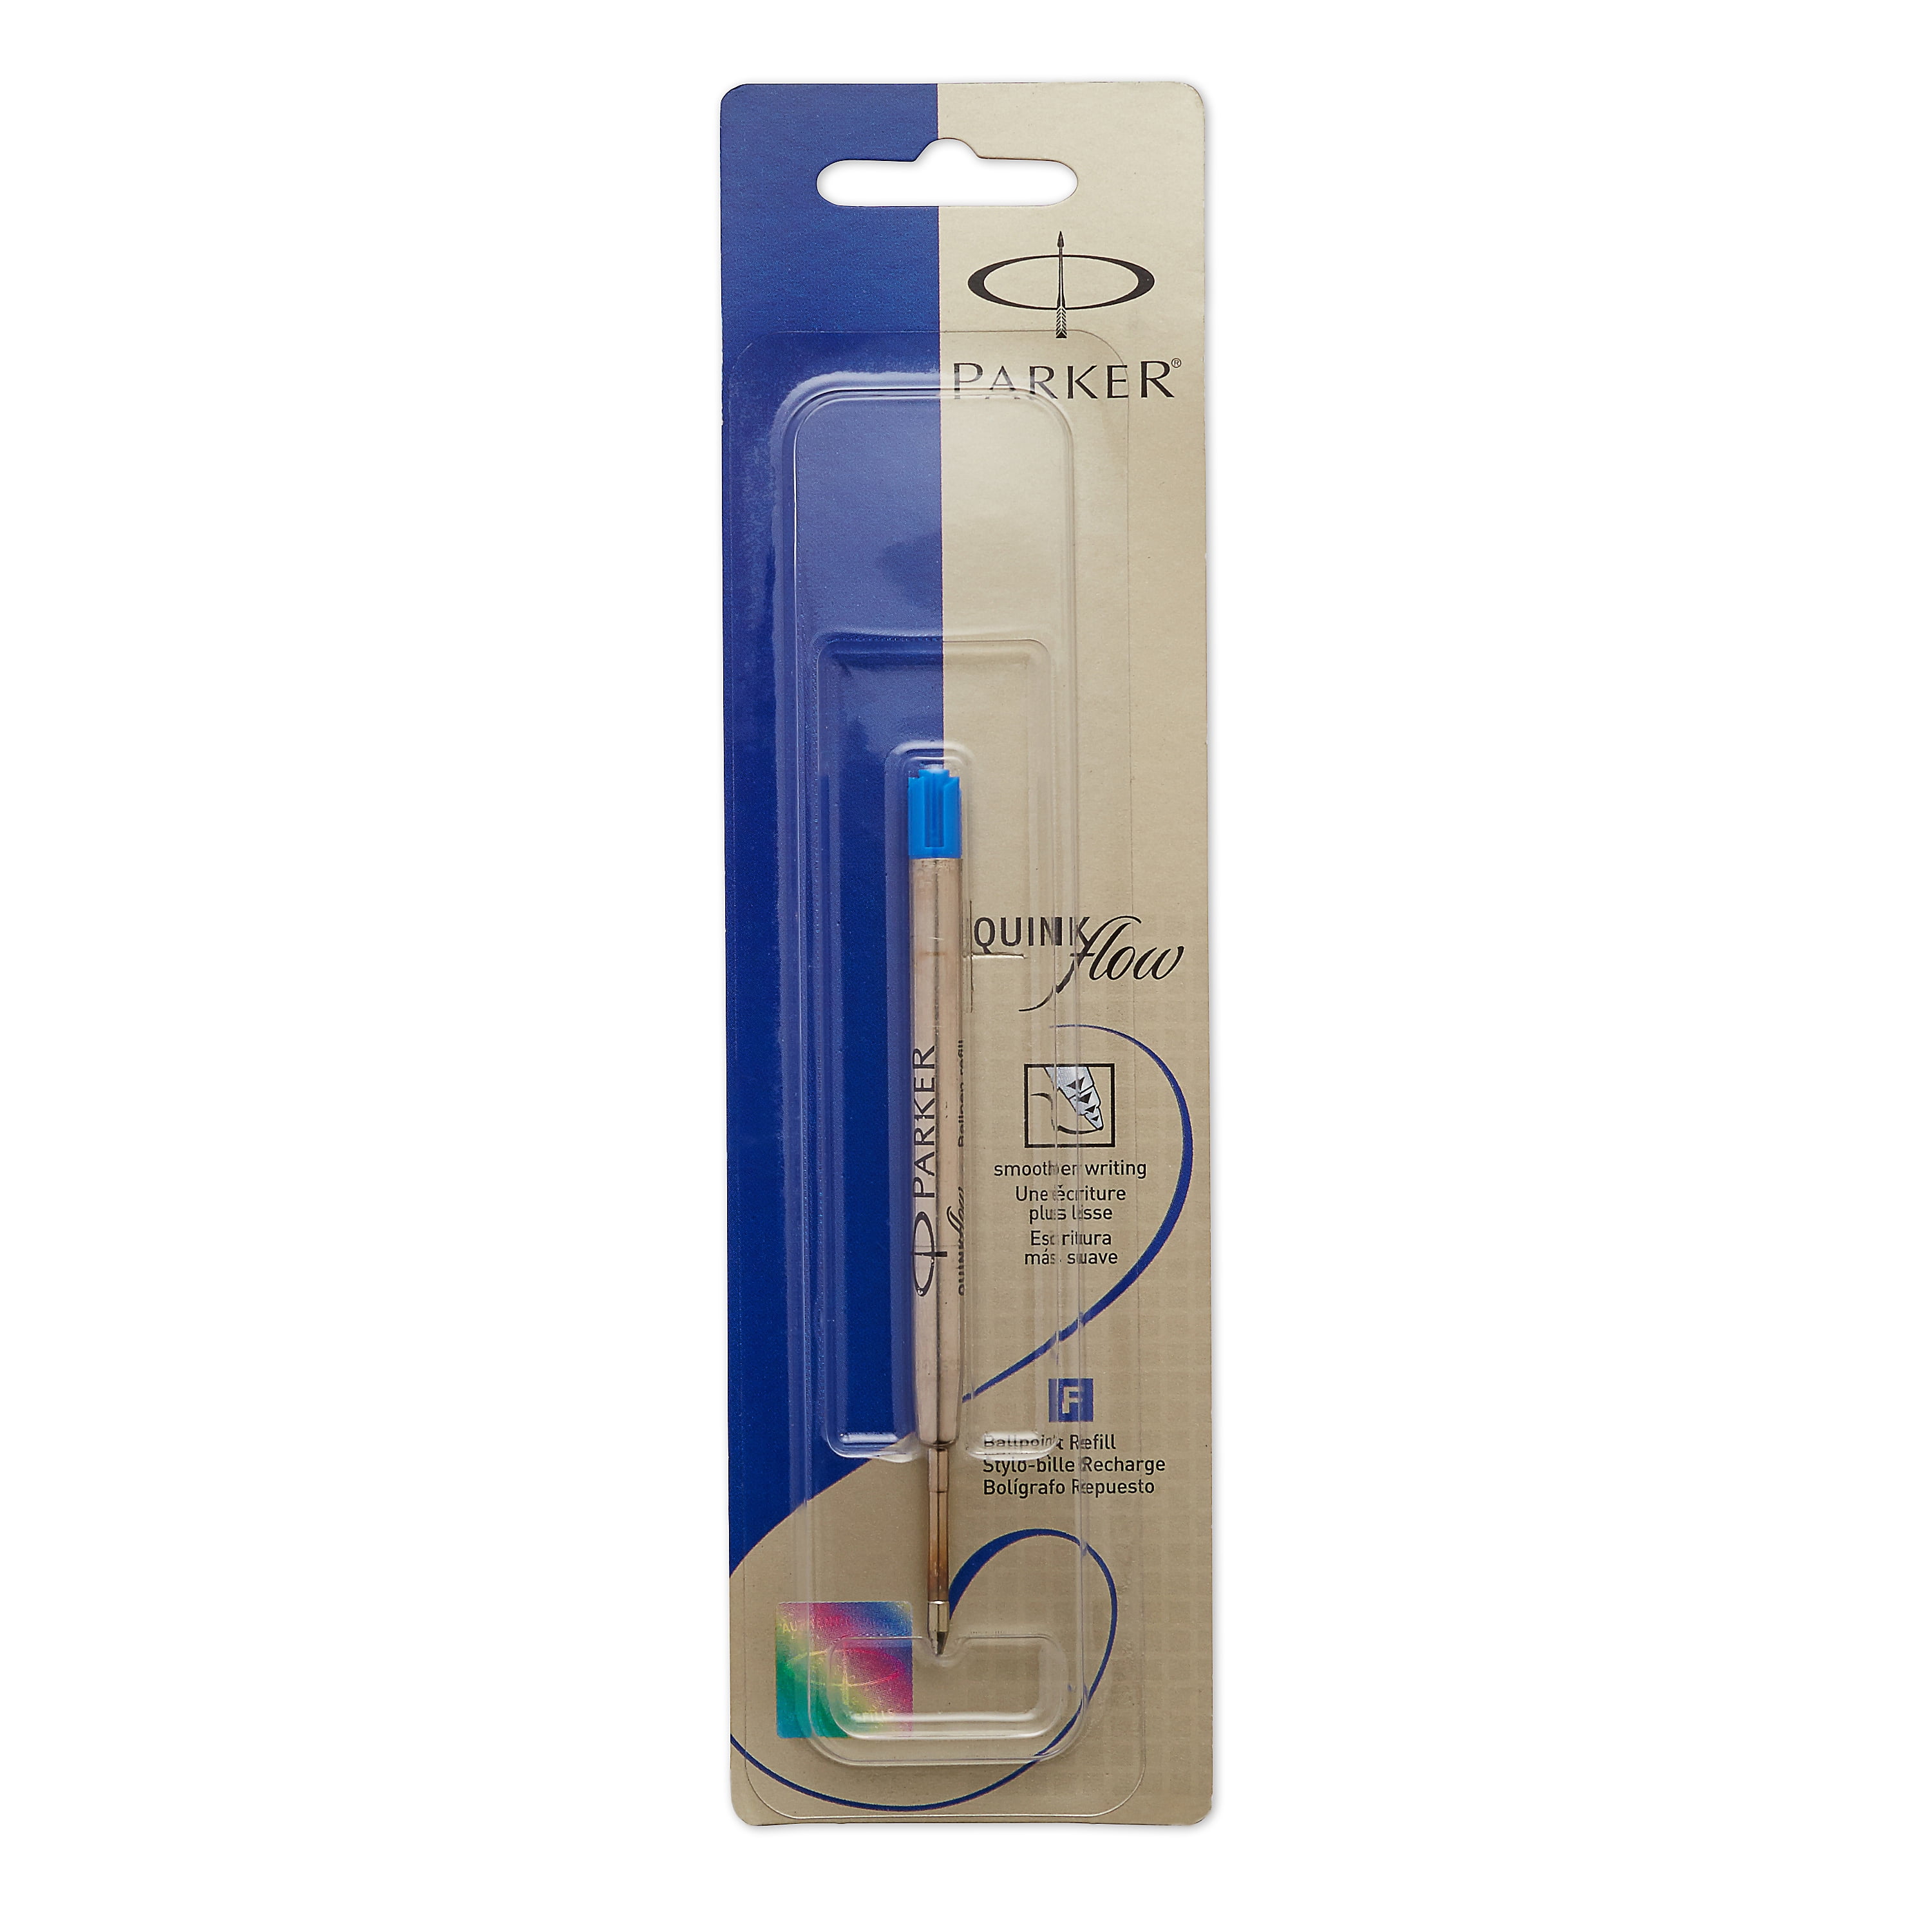 XONEX Soft Twist Silicon Ballpoint Pen SUNSET PINK #44510 blue ink Parker refill 